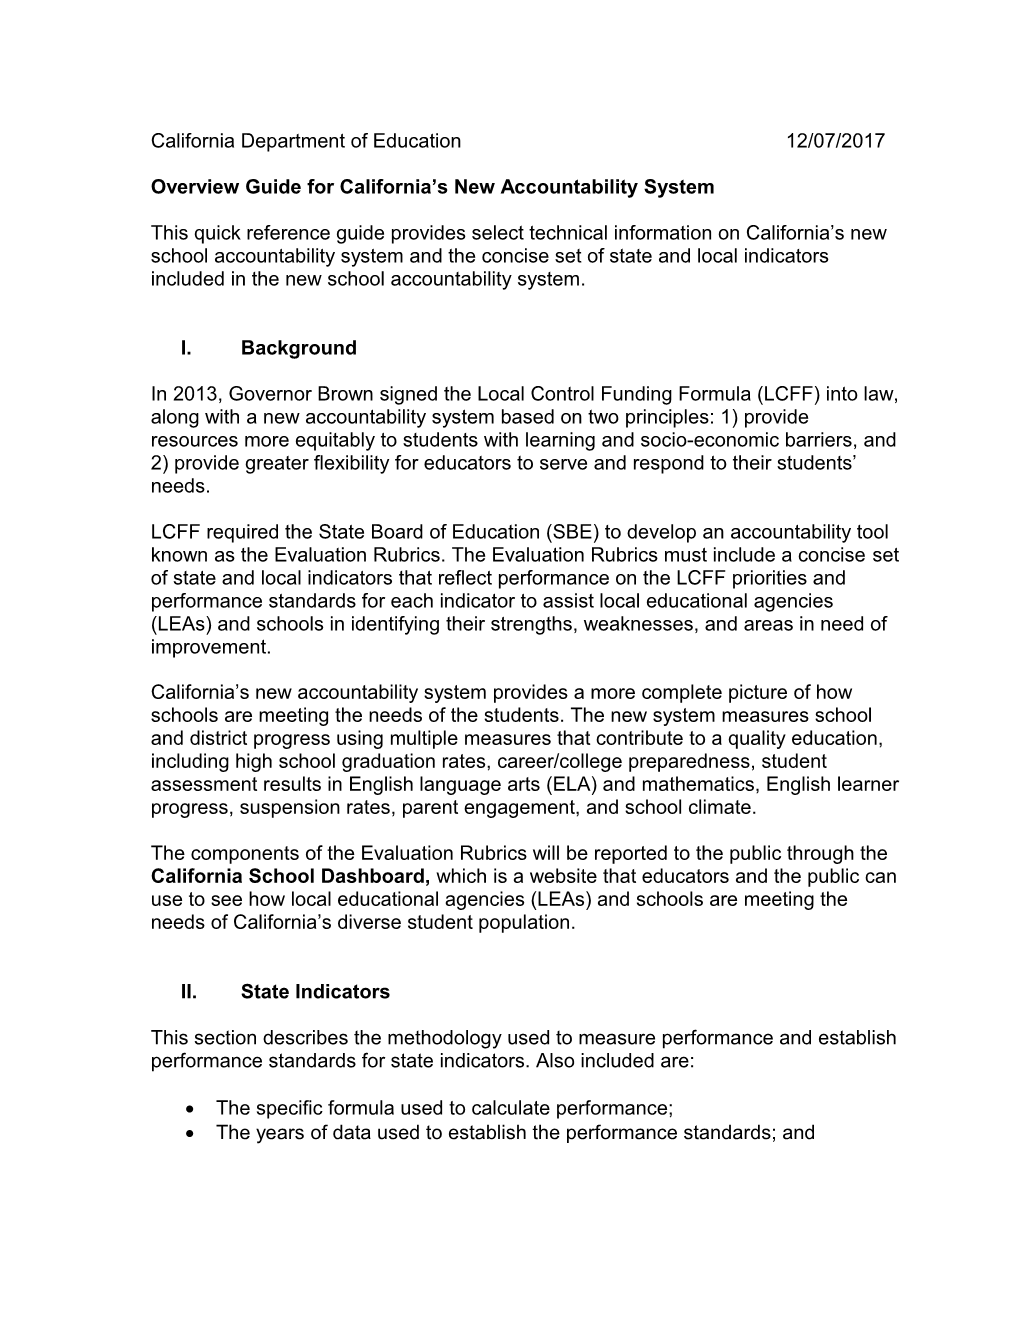 CA School Accountability System Quick Ref Guide - California Accountability Model & School